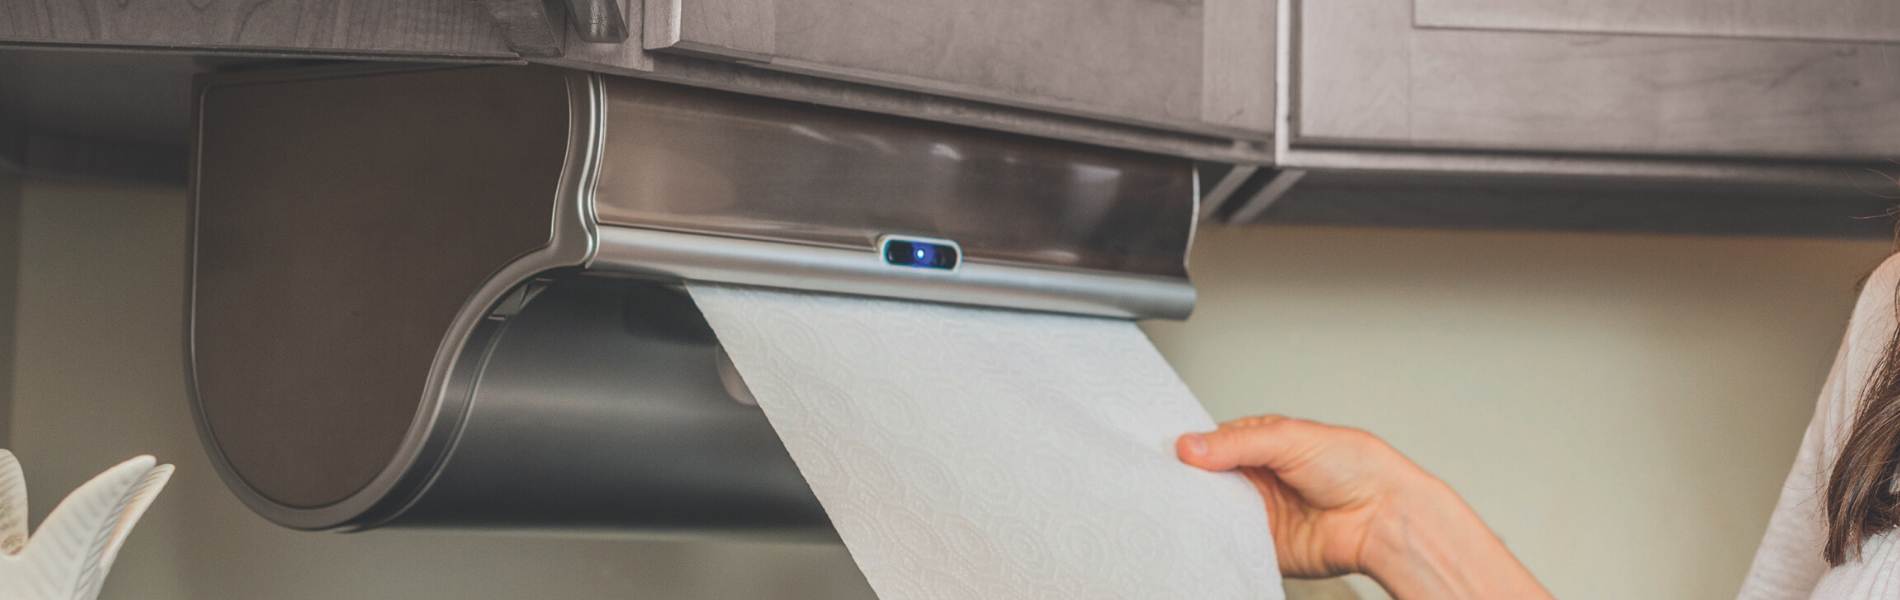 Innovia Touchless Paper Towel Dispenser - Countertop Models